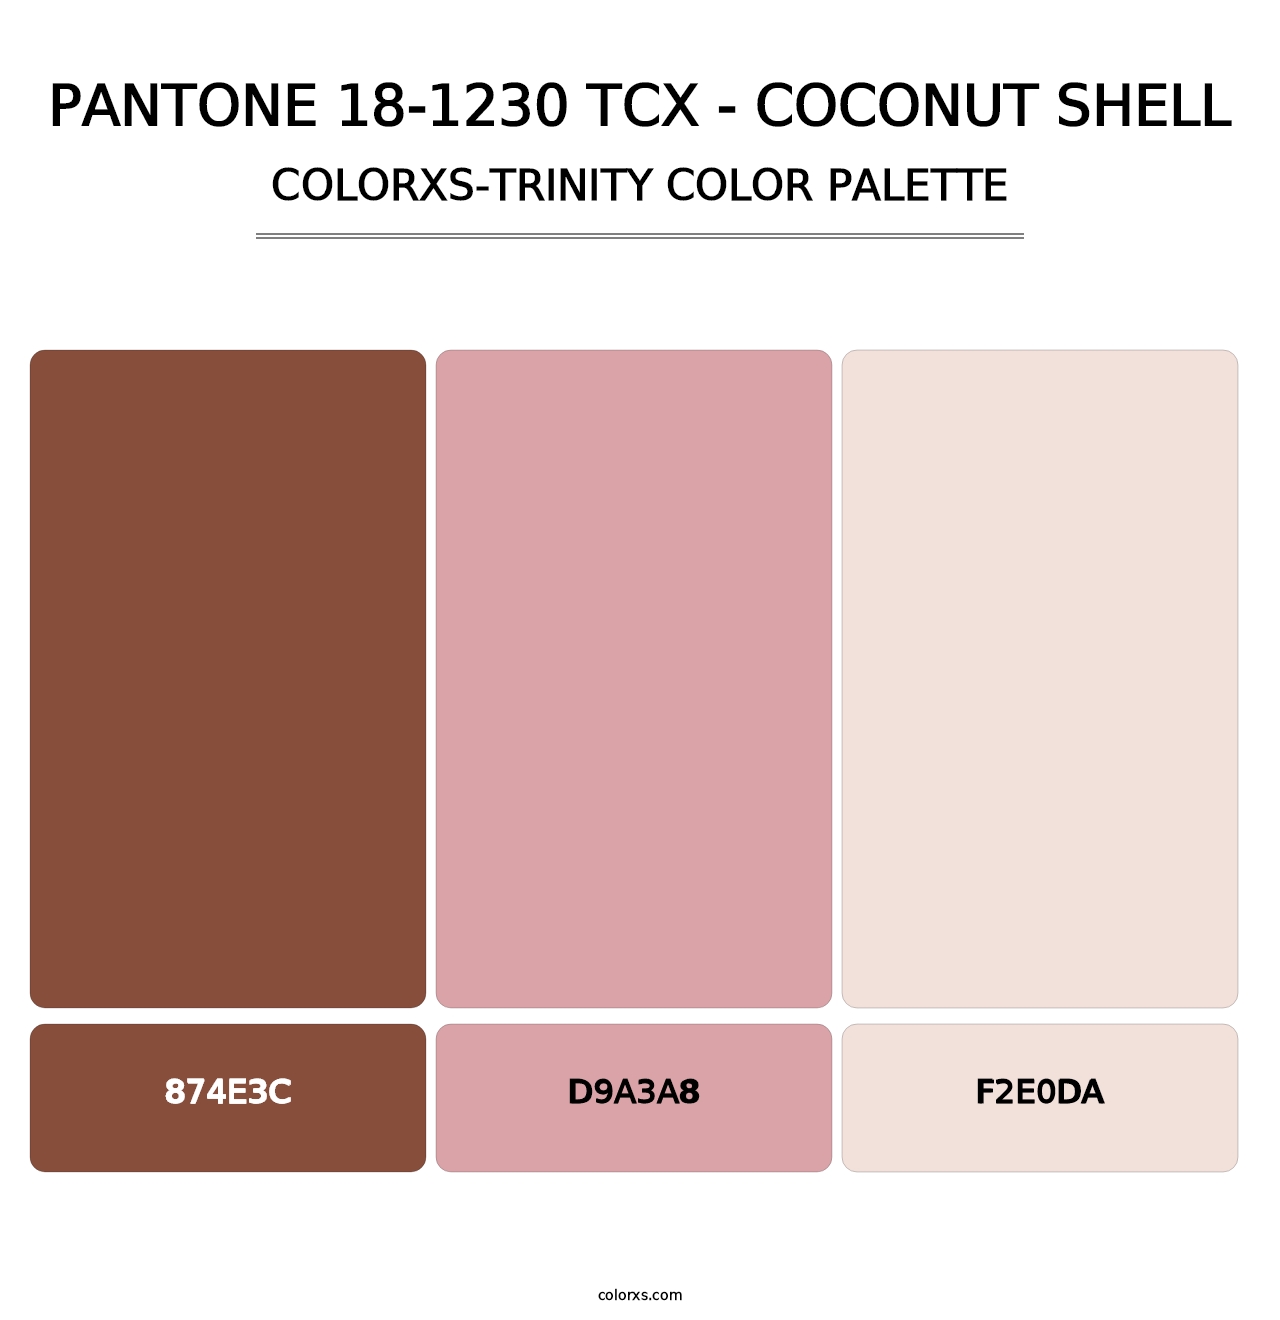 PANTONE 18-1230 TCX - Coconut Shell - Colorxs Trinity Palette